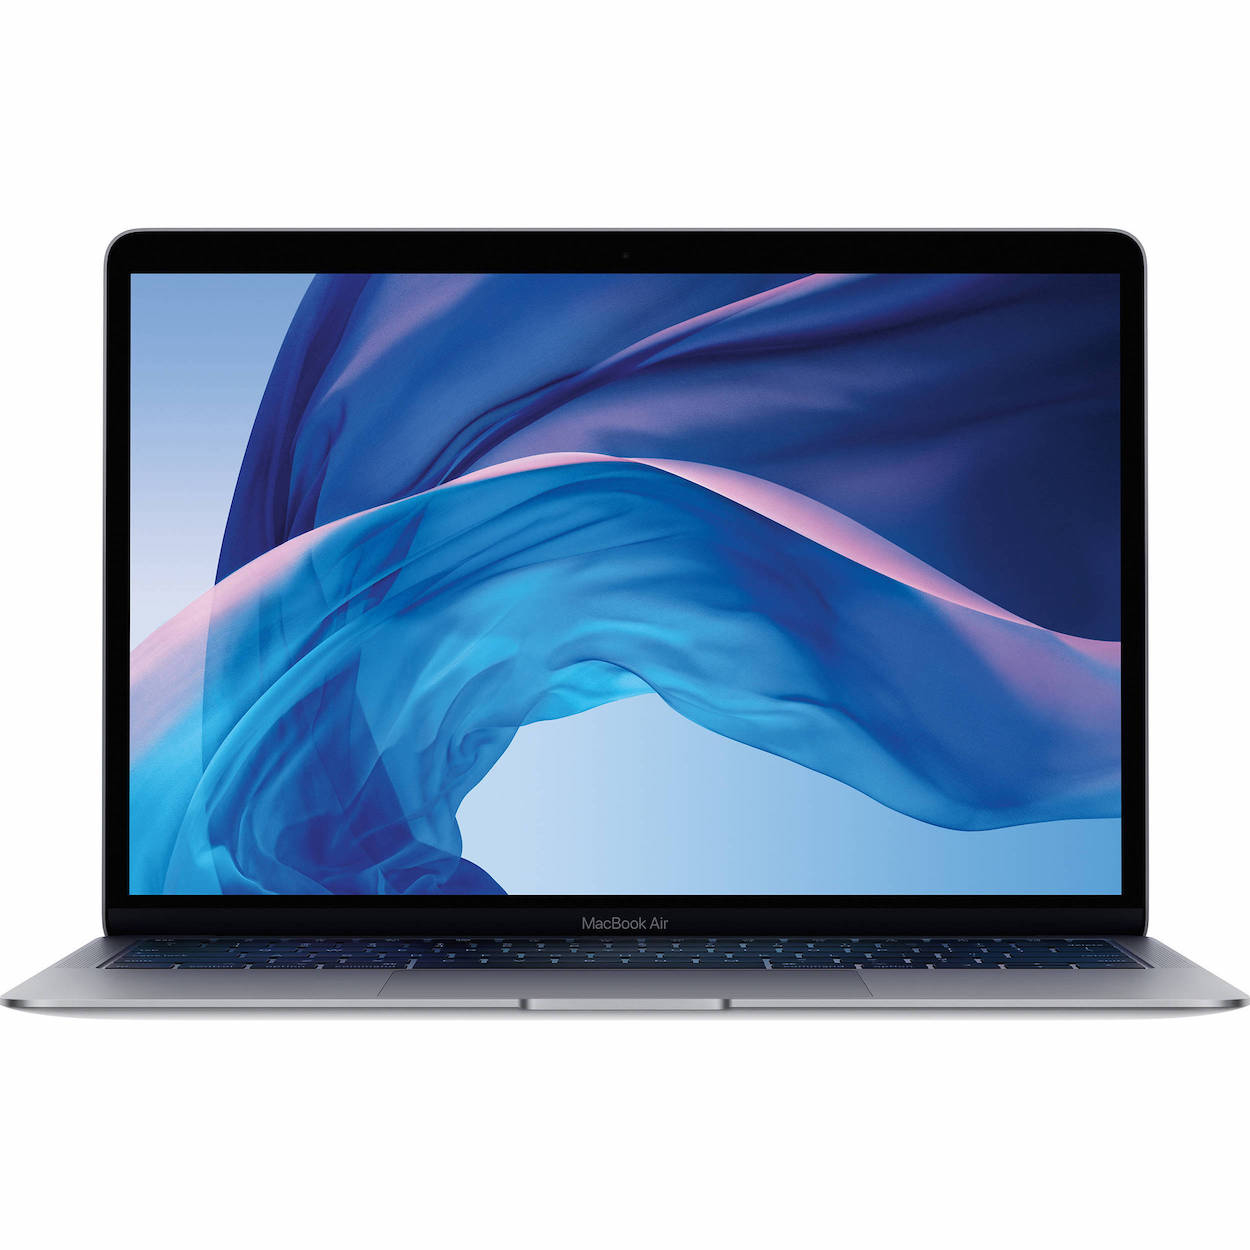 macbook-air-2020-13-inch-core-i5-8gb-512gb-z0yj0-cto-new-99-bac-sku-19516847460120